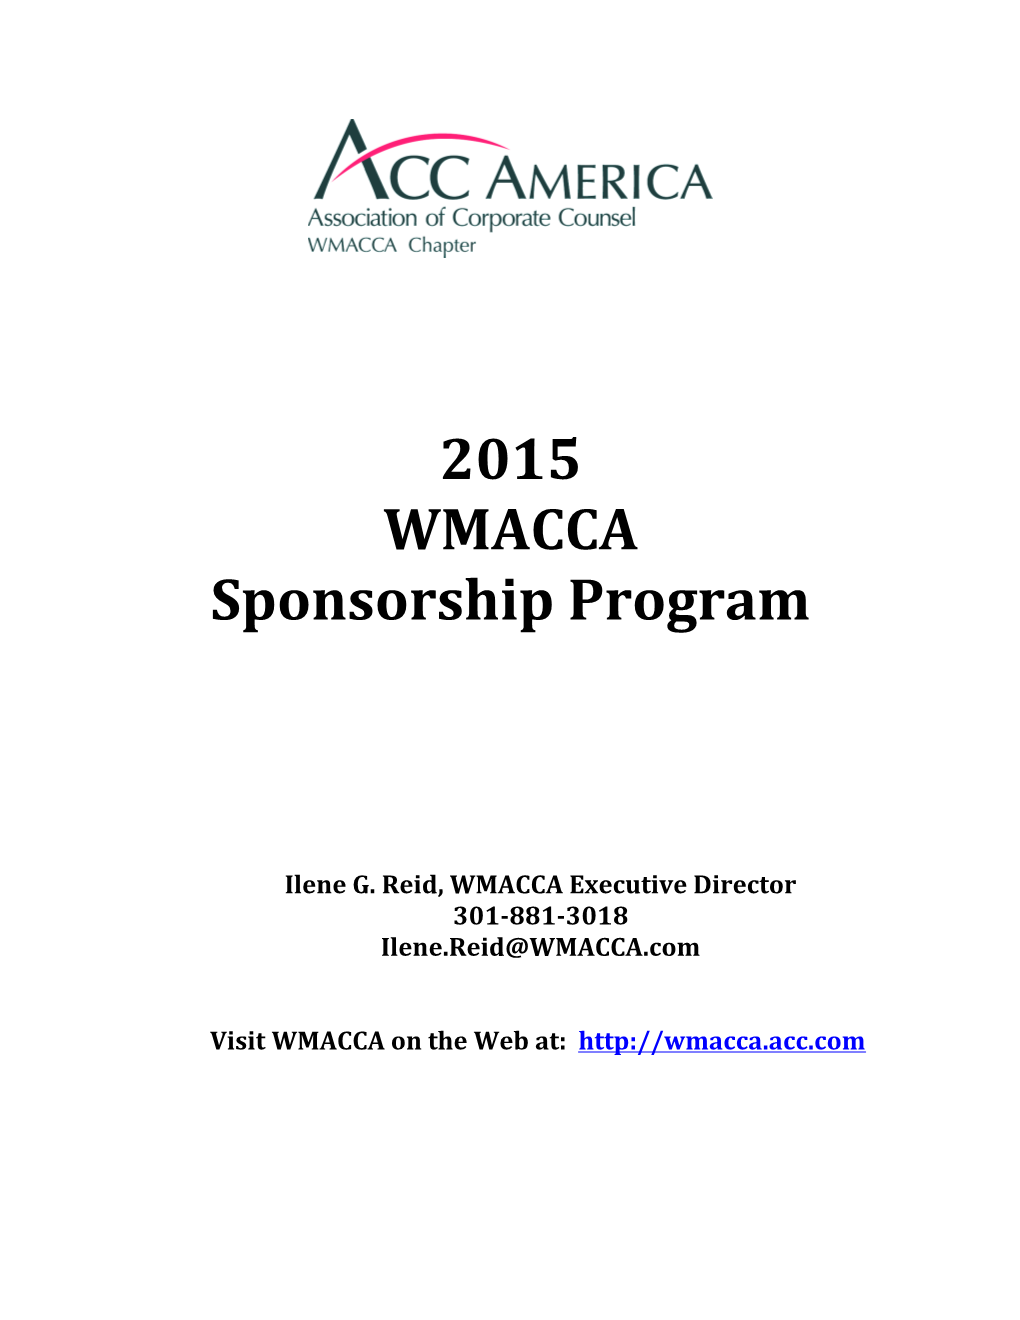 WMACCA Diamond Sponsorship ($35,000)